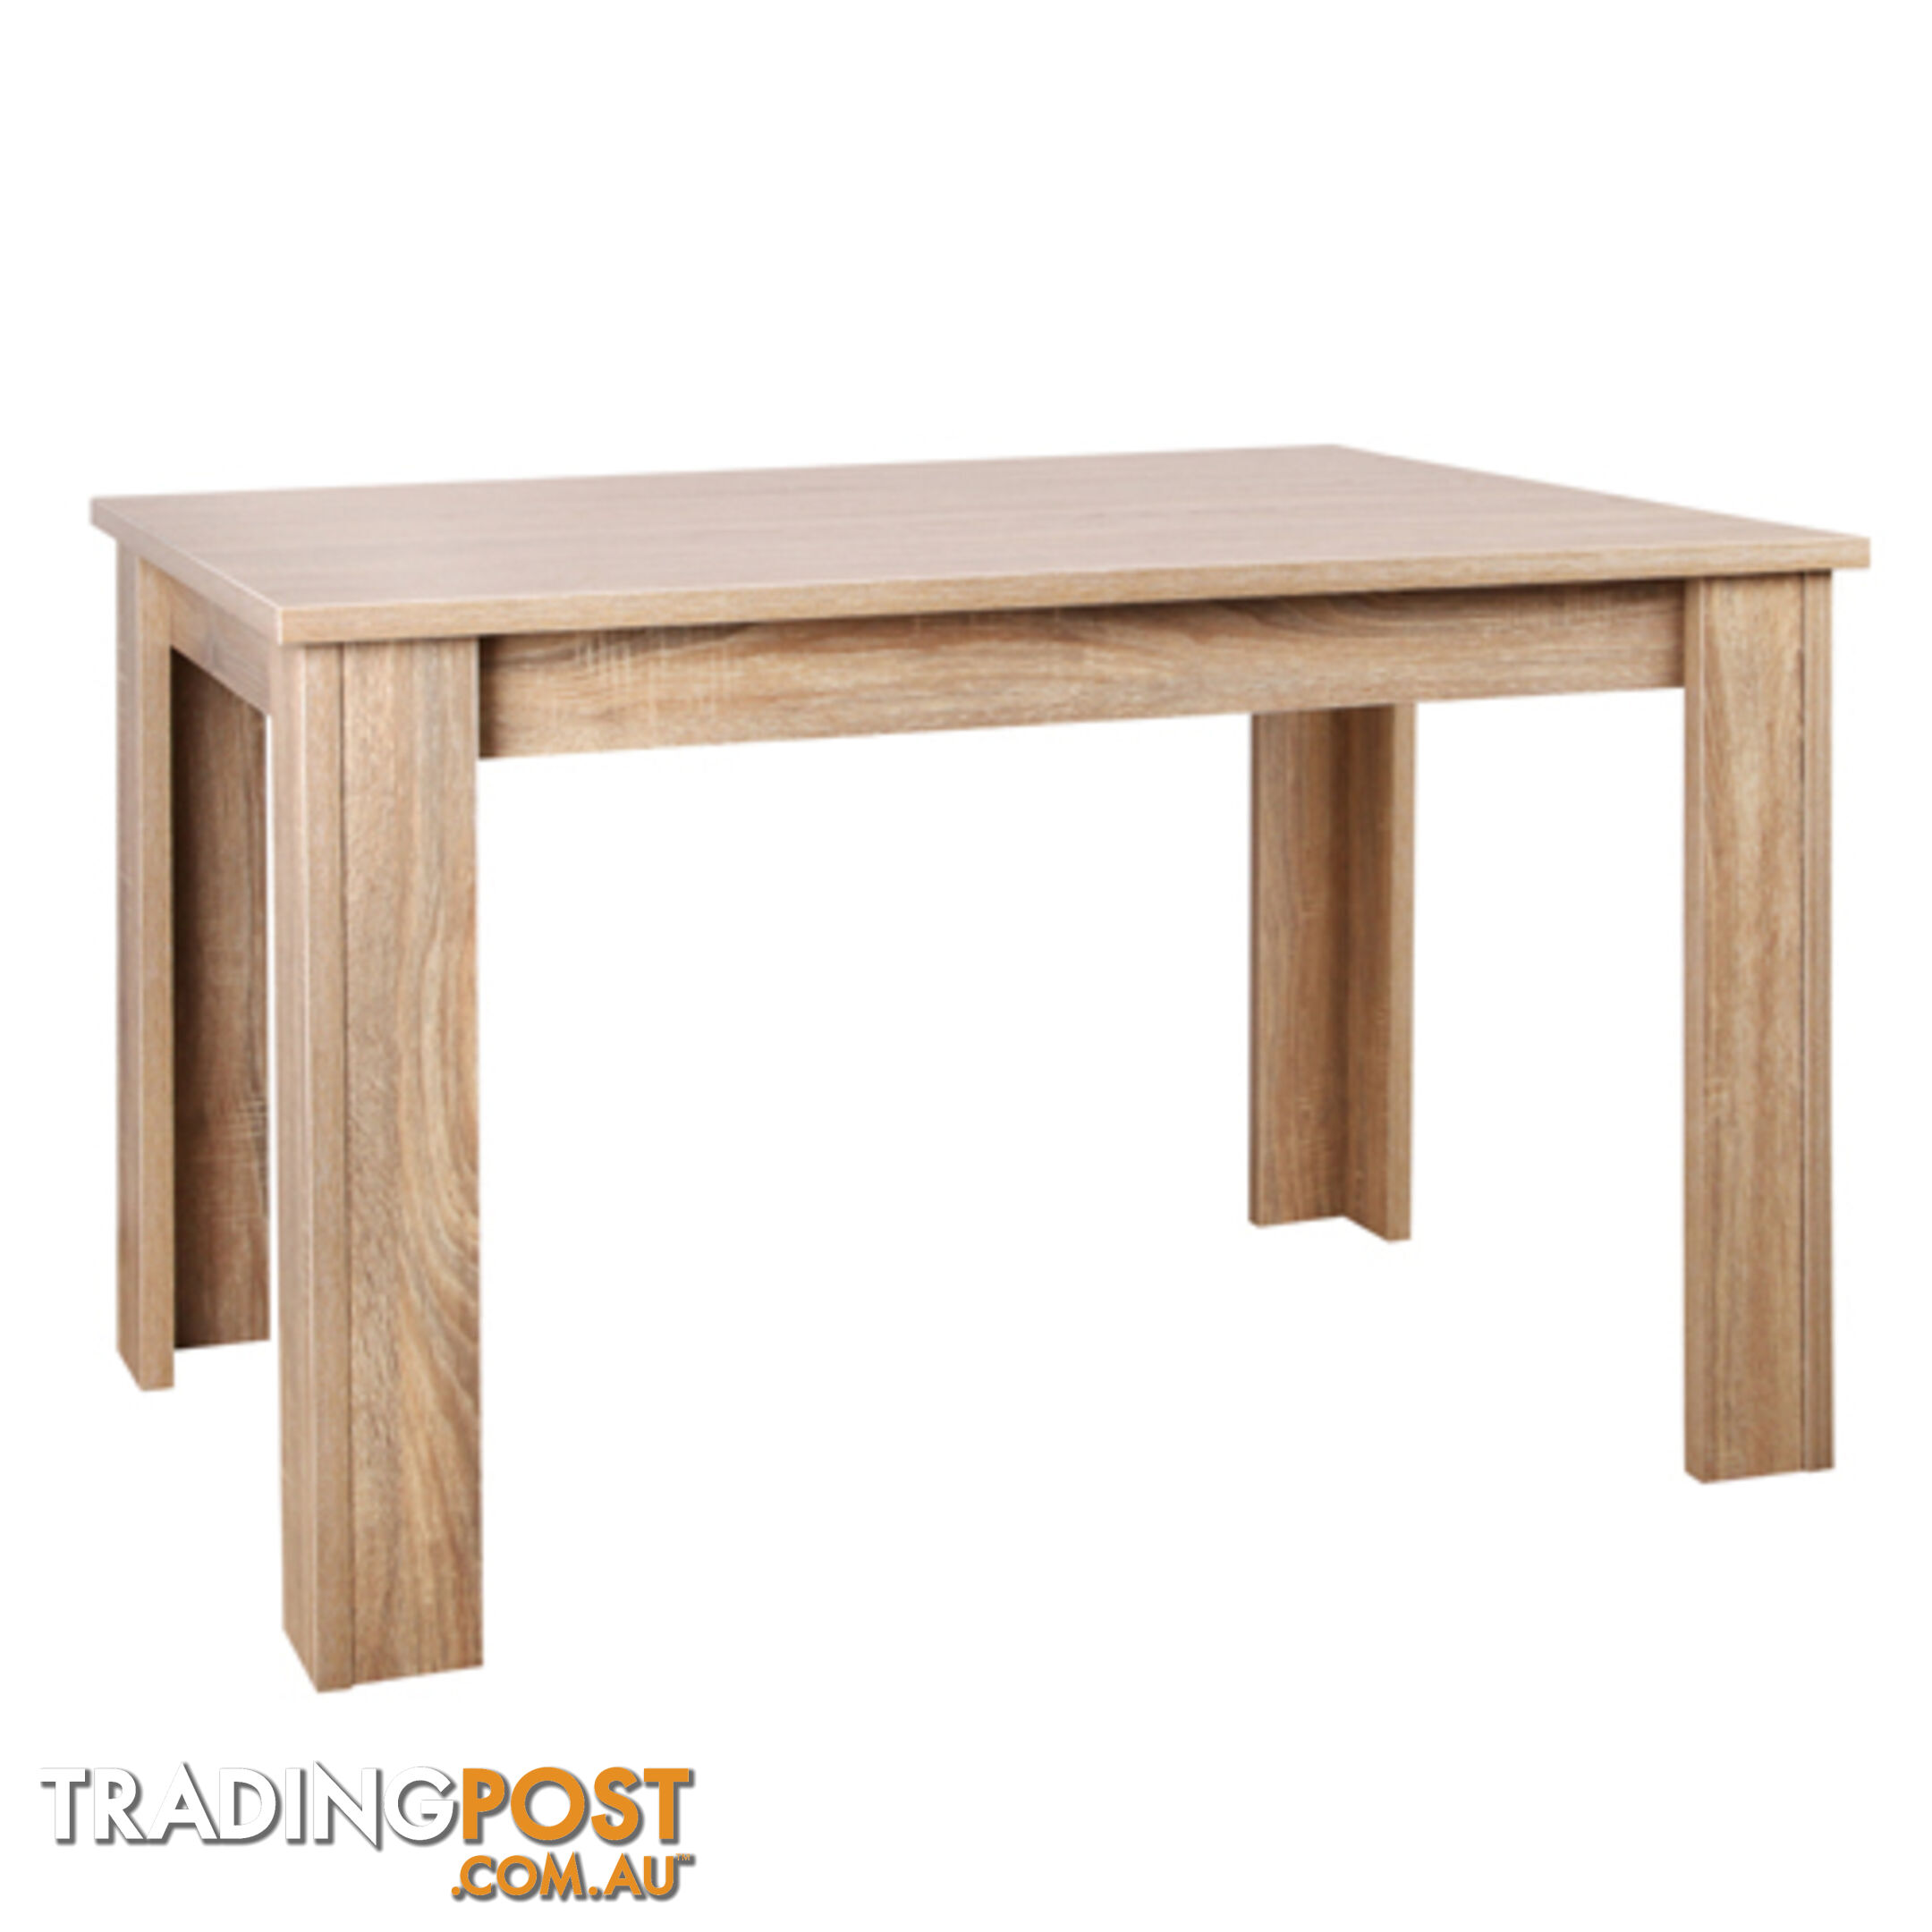 Rectangular 4 Seater Dining Table Natural Wood